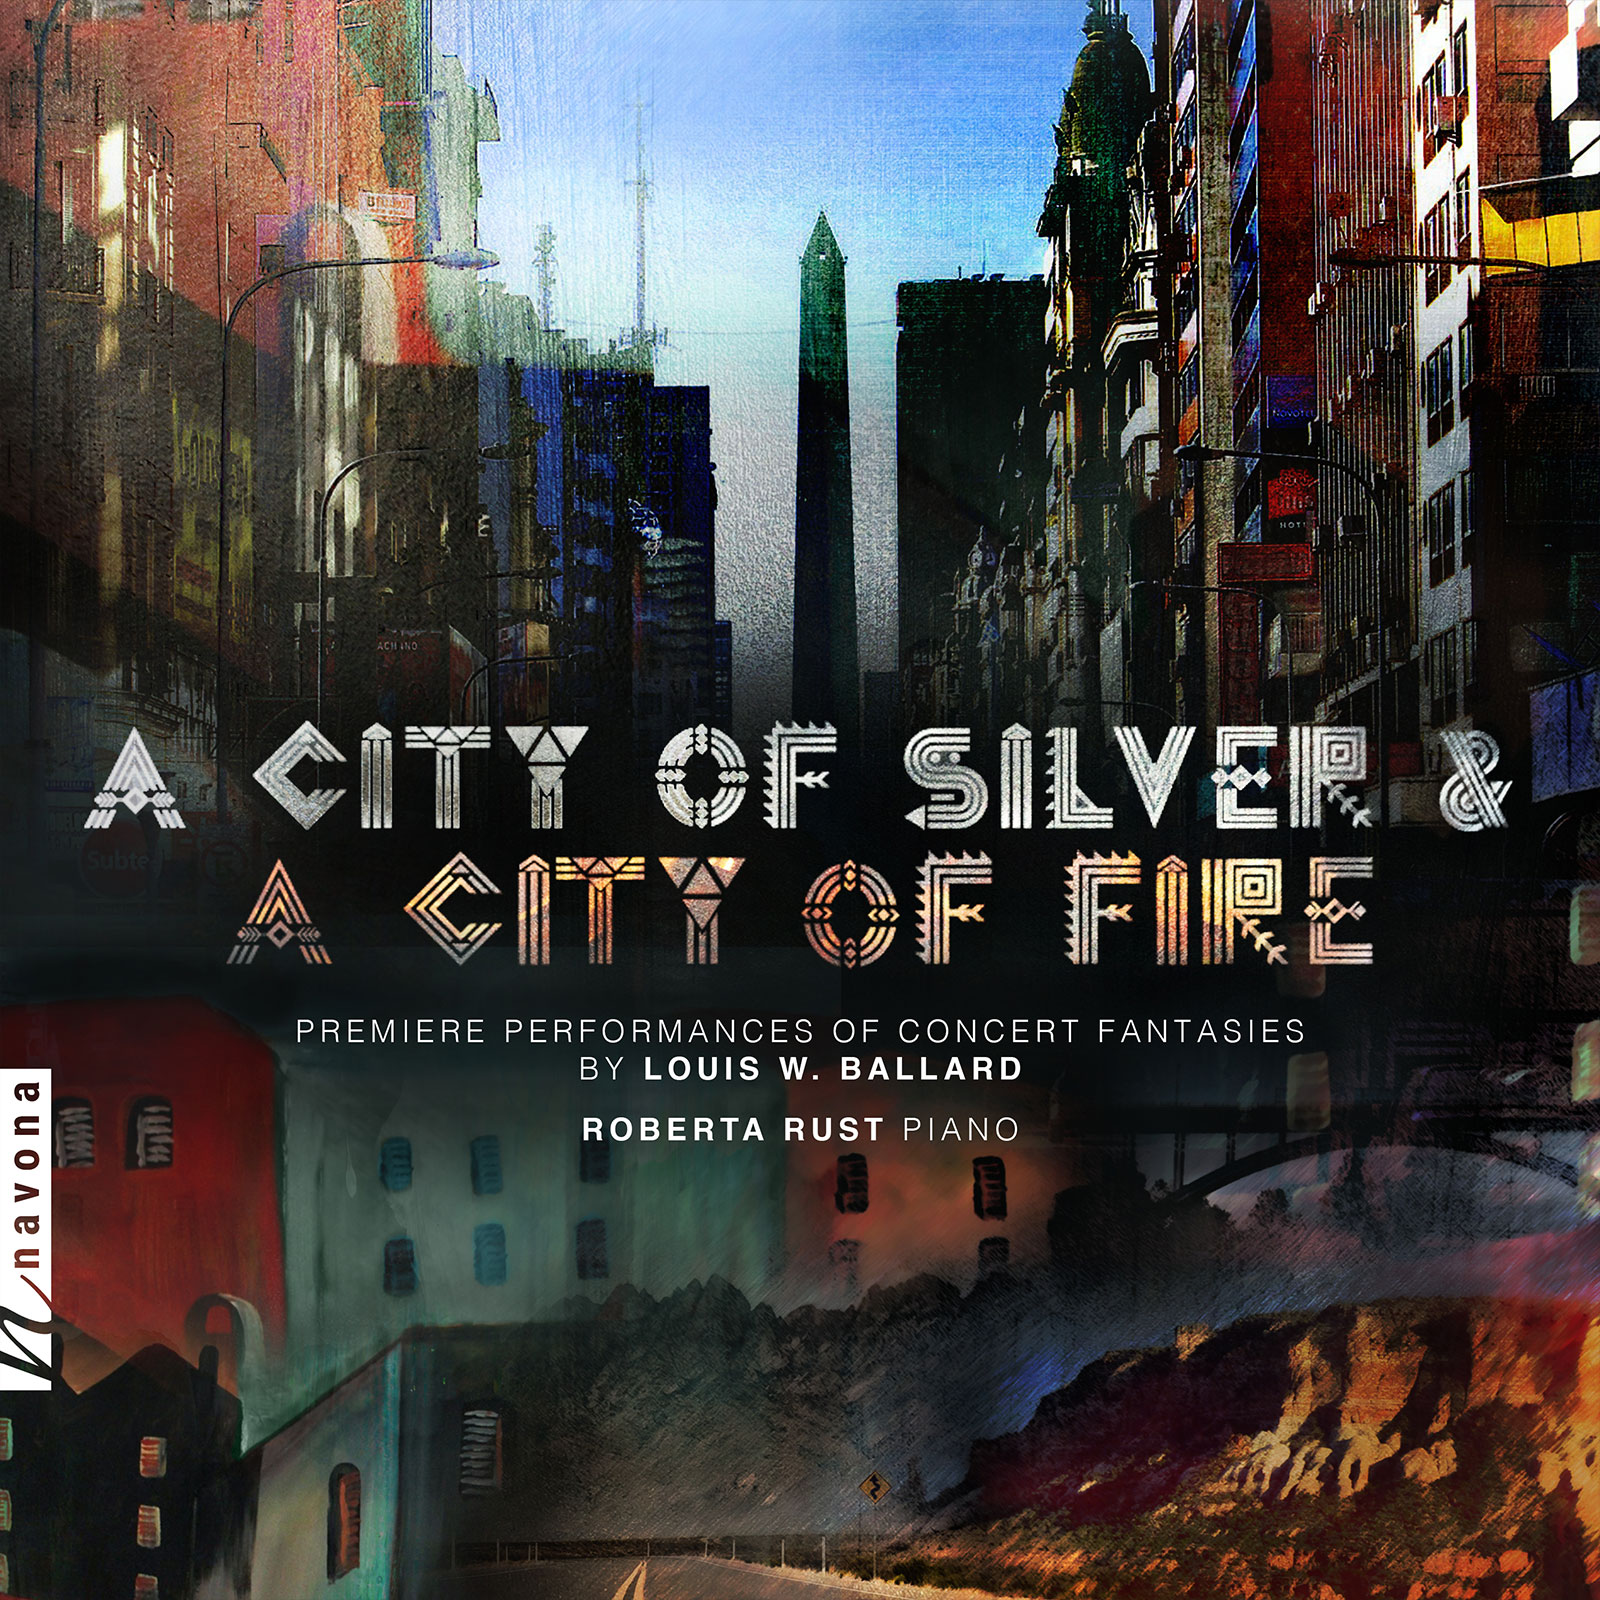 A CITY A SILVER & A CITY OF FIRE - Album Cover